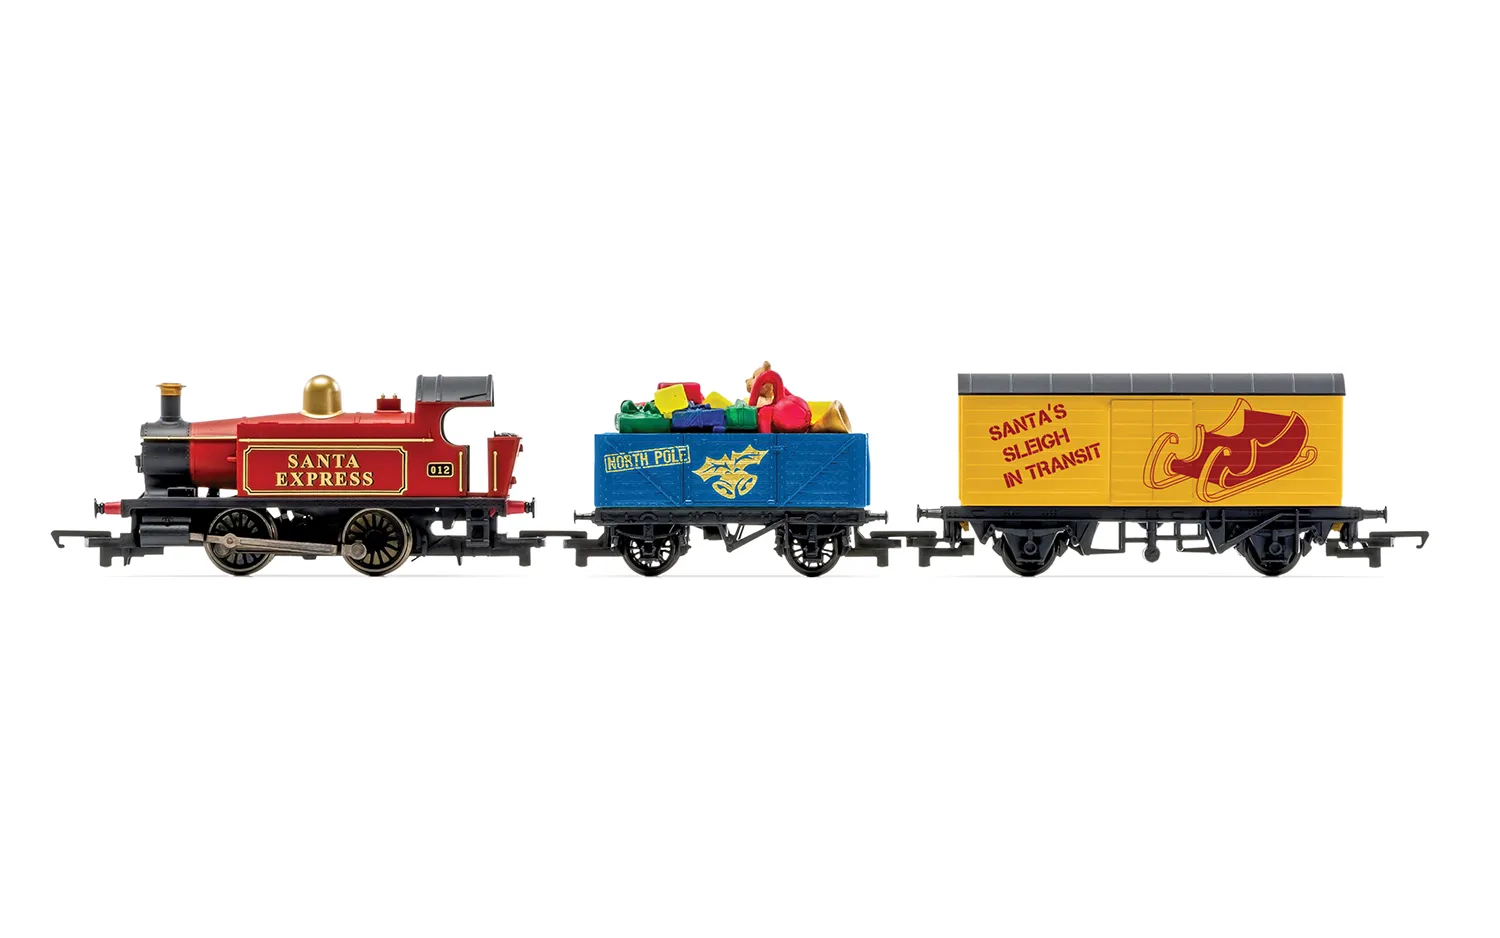 Set de Tren Santa’s Express – versión con enchufe UE